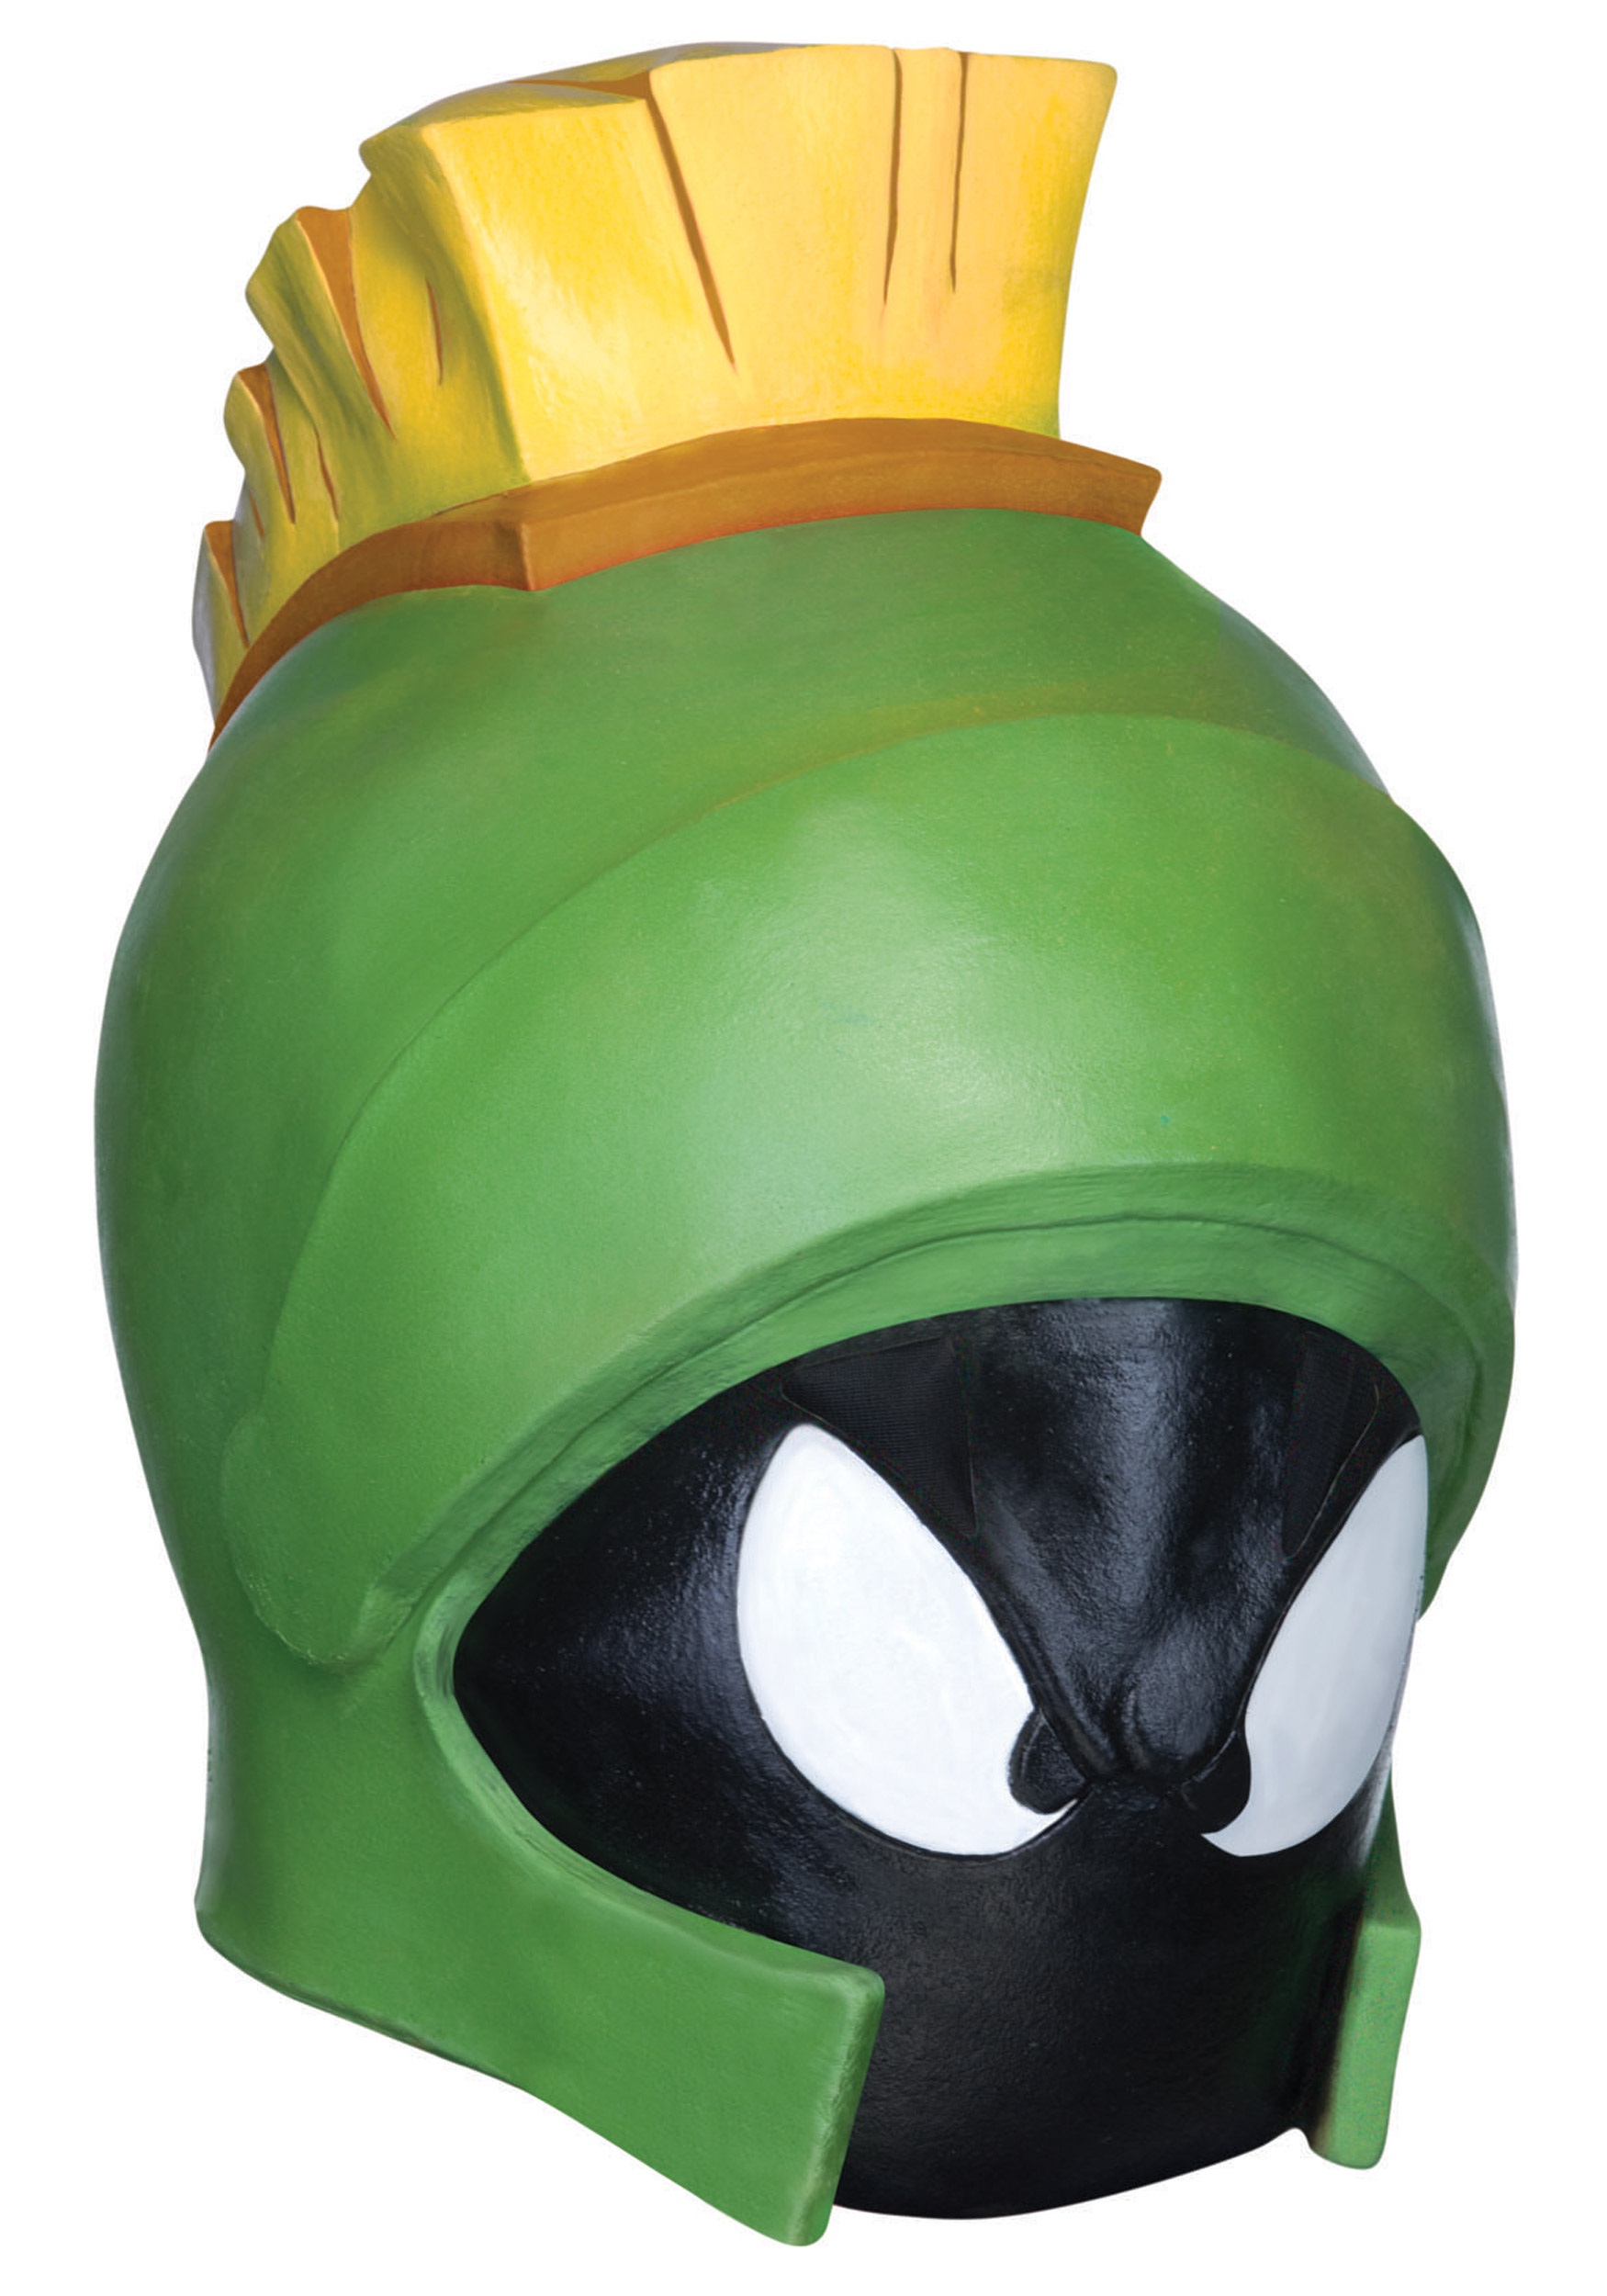 Marvin the Martian Mask - Halloween Costume Ideas 2022.